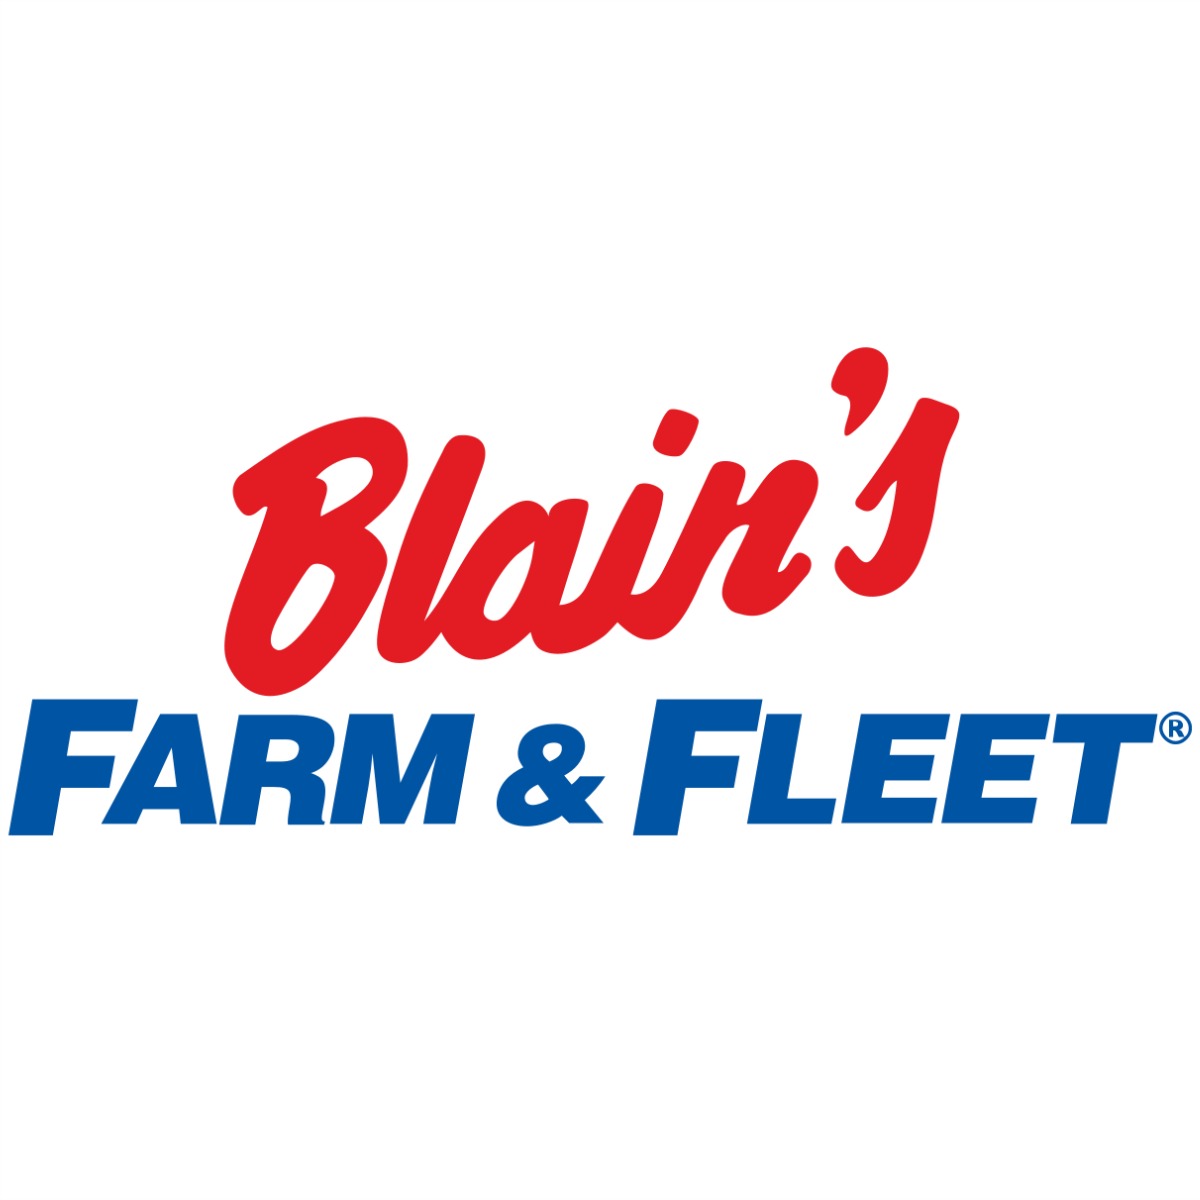 Blain's Farm & Fleet Logo